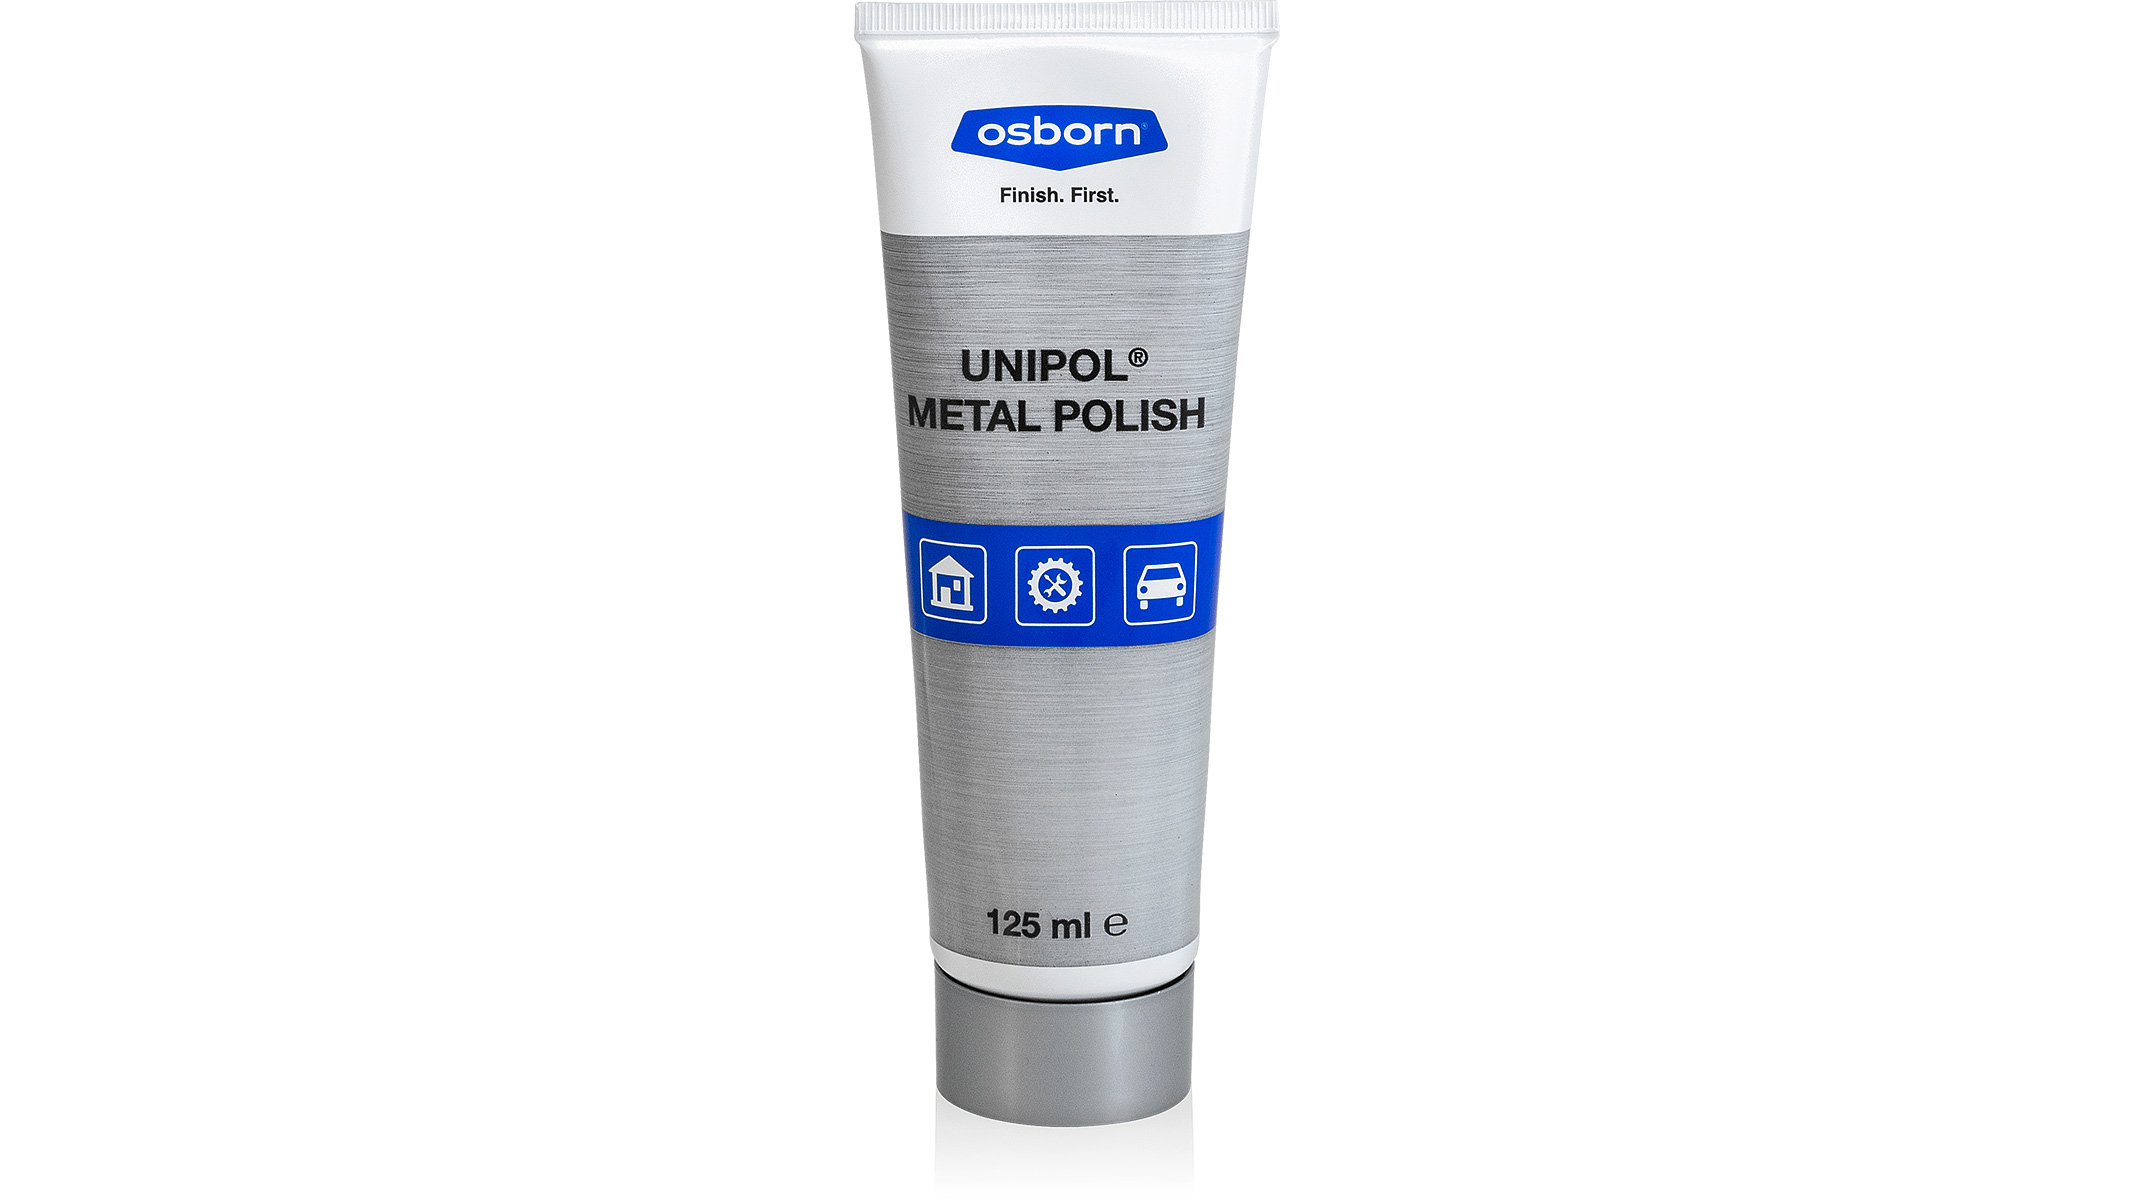 Unipol Metal Polish, Polierpaste für Metalle, Tube 125 ml